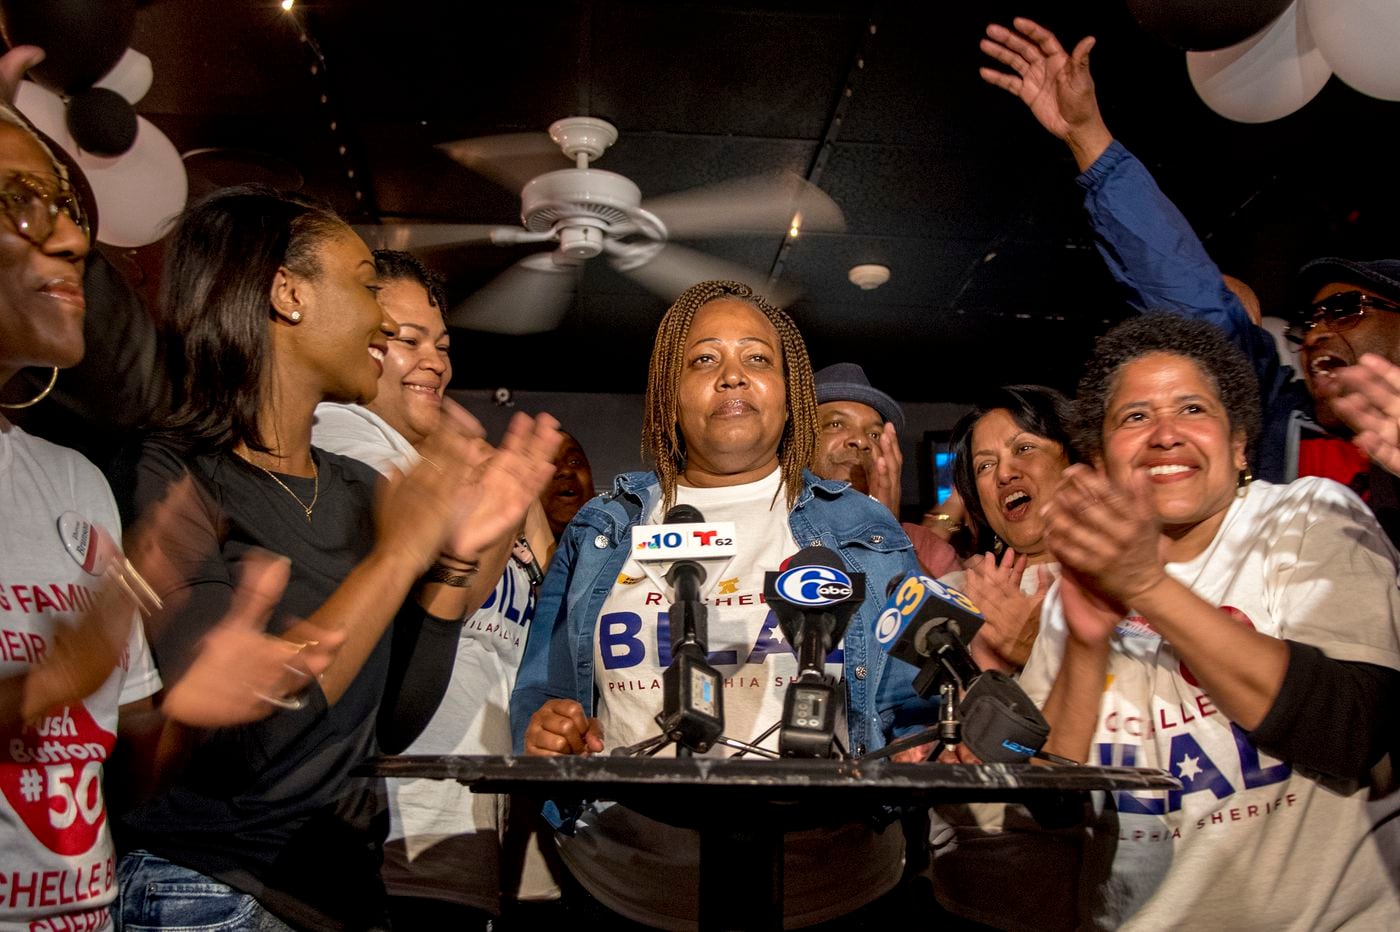 Rochelle Bilal wins primary election for Philadelphia sheriff in upset